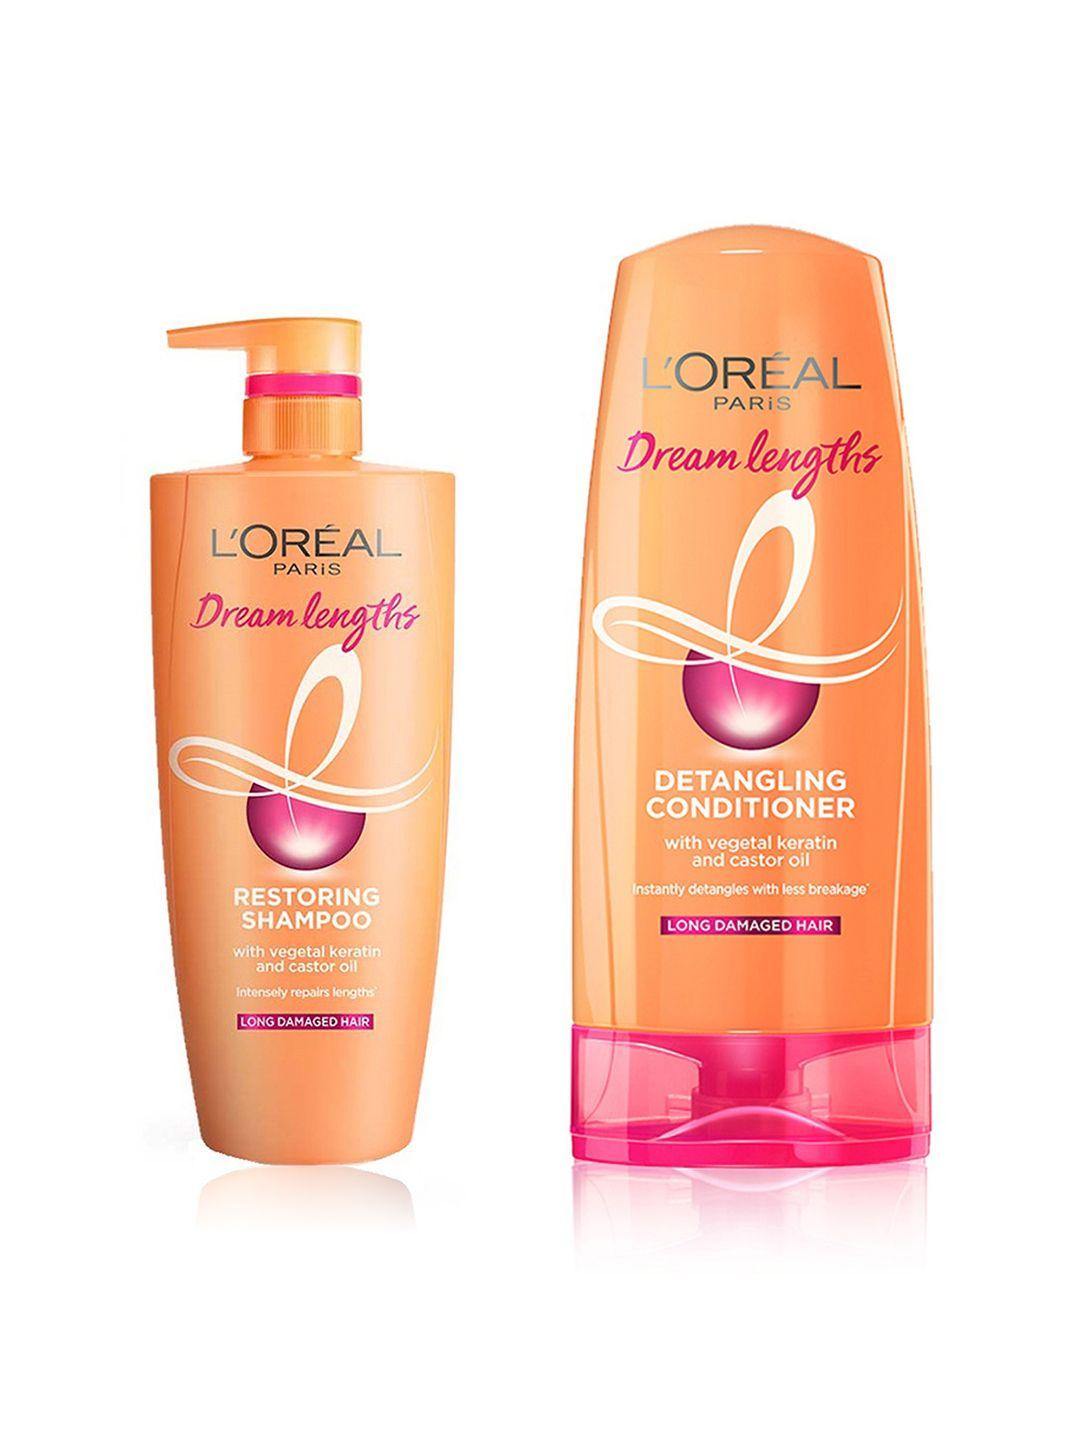 loreal-paris-dream-length-restoring-shampoo-650ml-&-detangling-conditioner-180ml